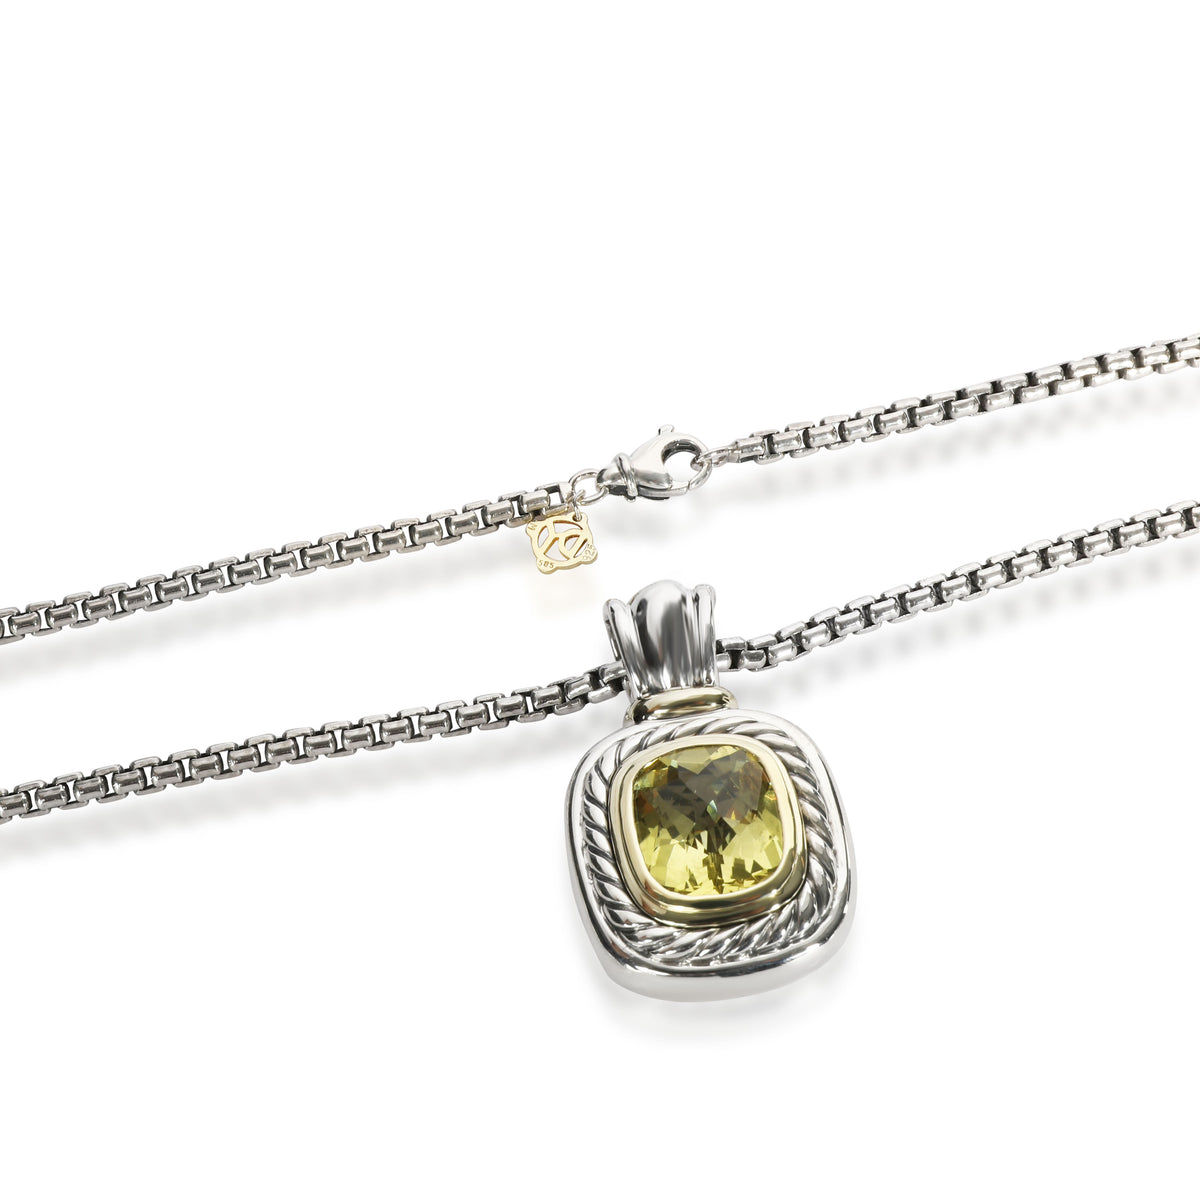 David Yurman Albion Lemon Quartz Necklace in 14K Yellow Gold/Sterling Silver